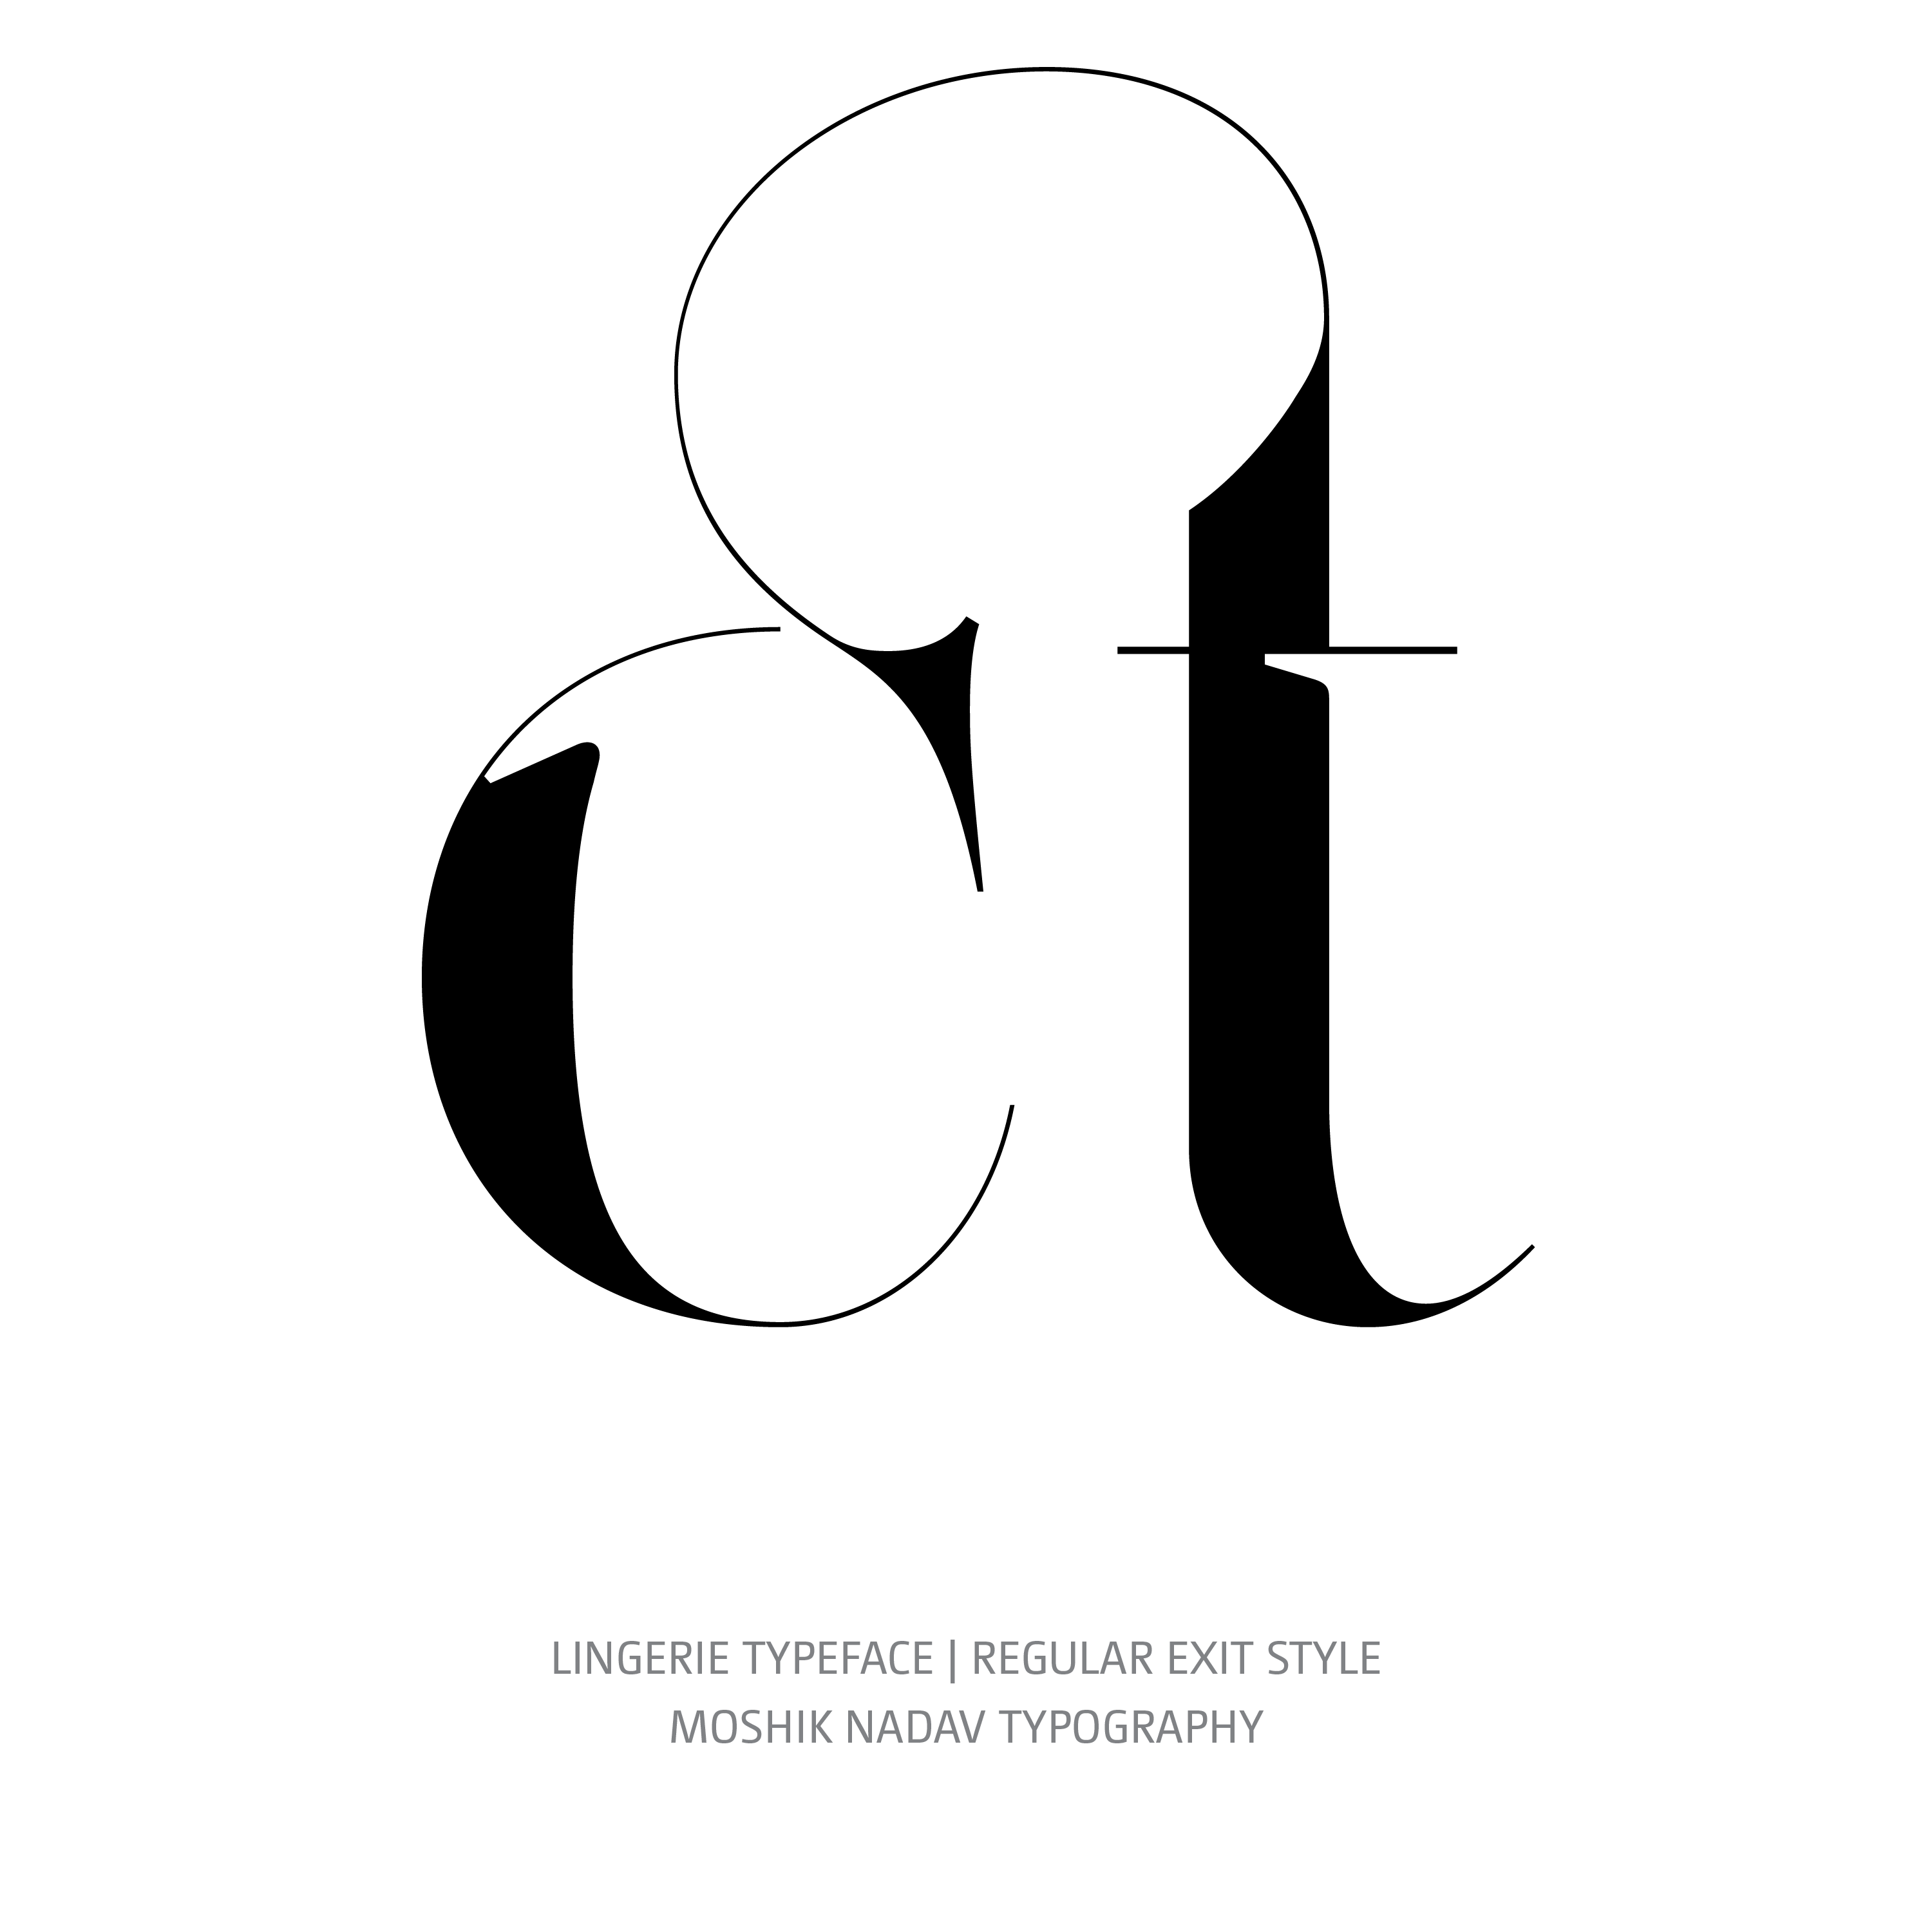 Lingerie Typeface Regular Exit ct ligature